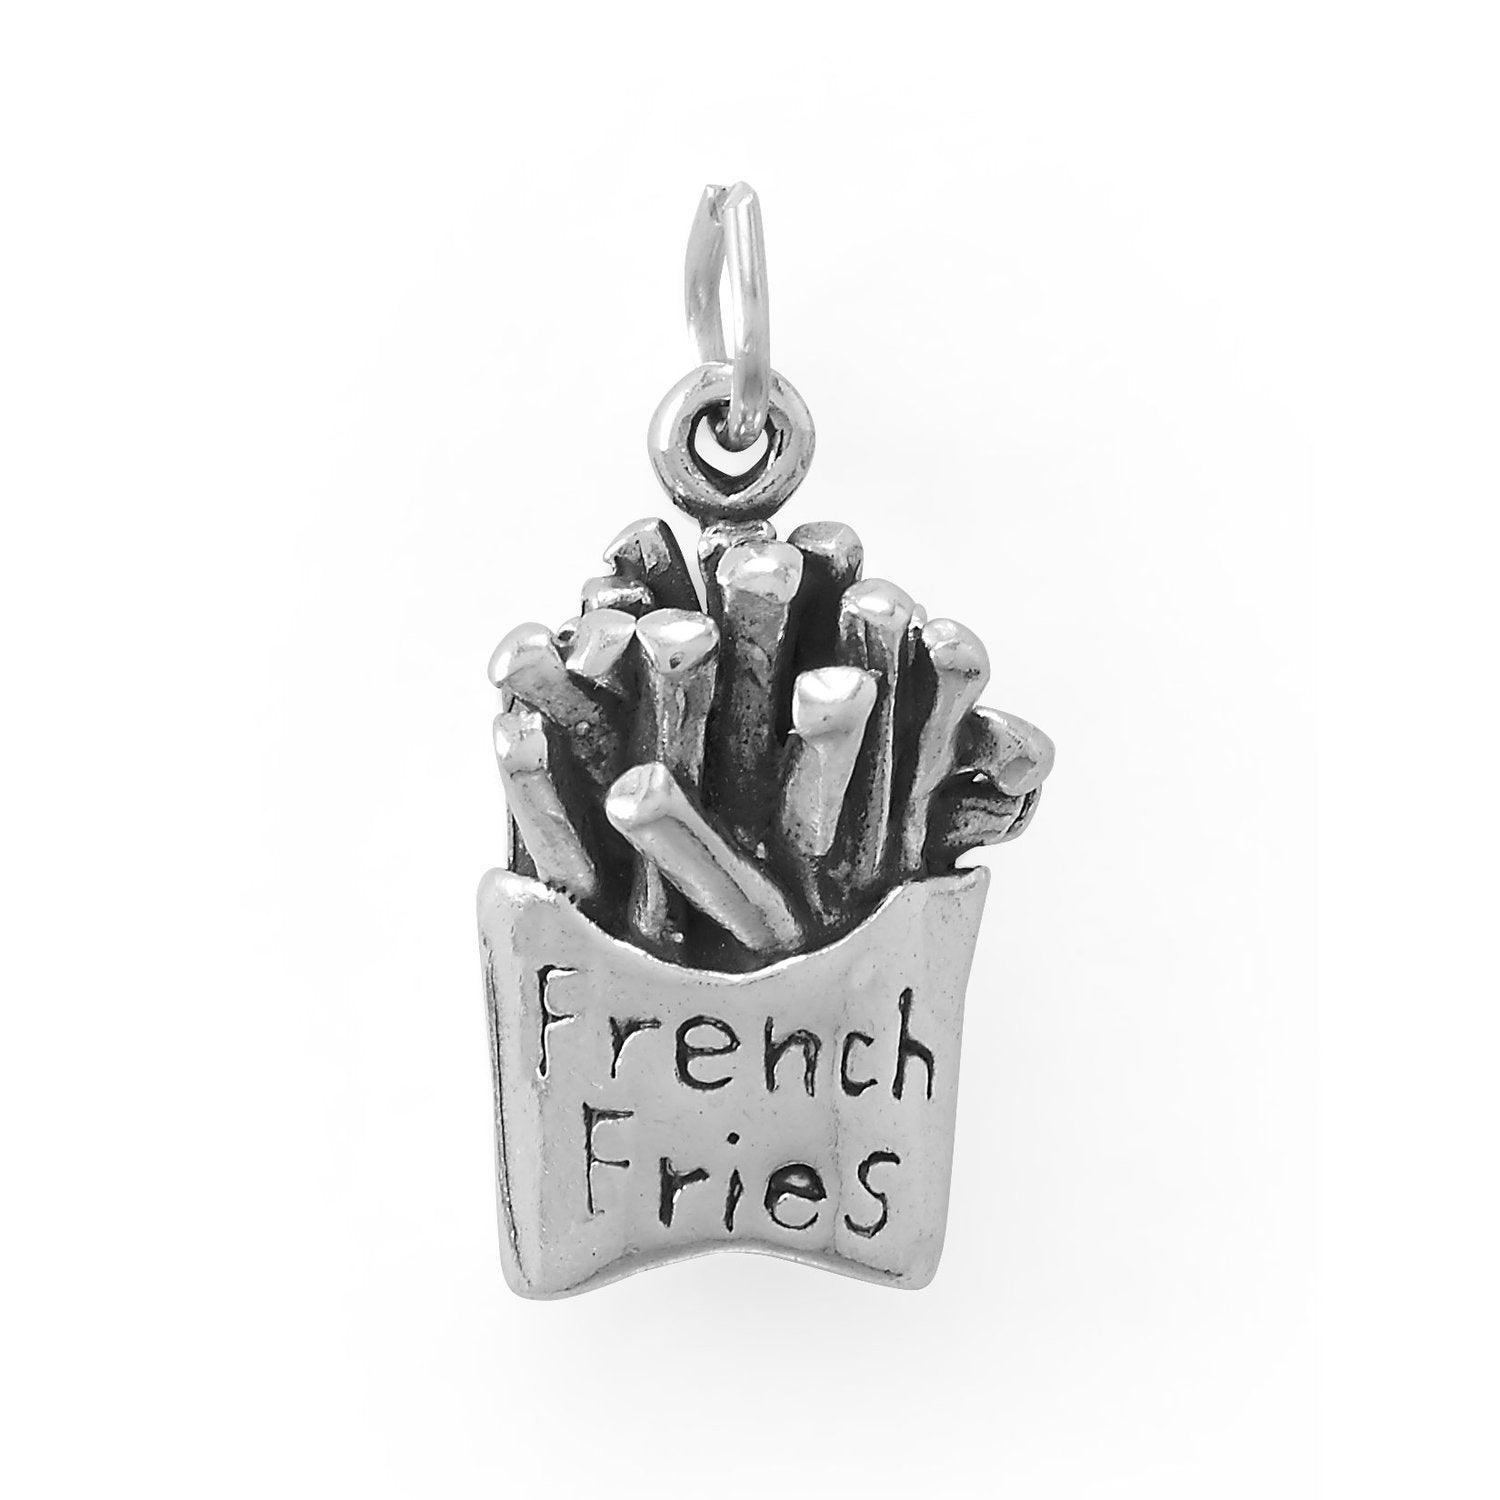 Yum! French Fries Charm freeshipping - Higher Class Elegance